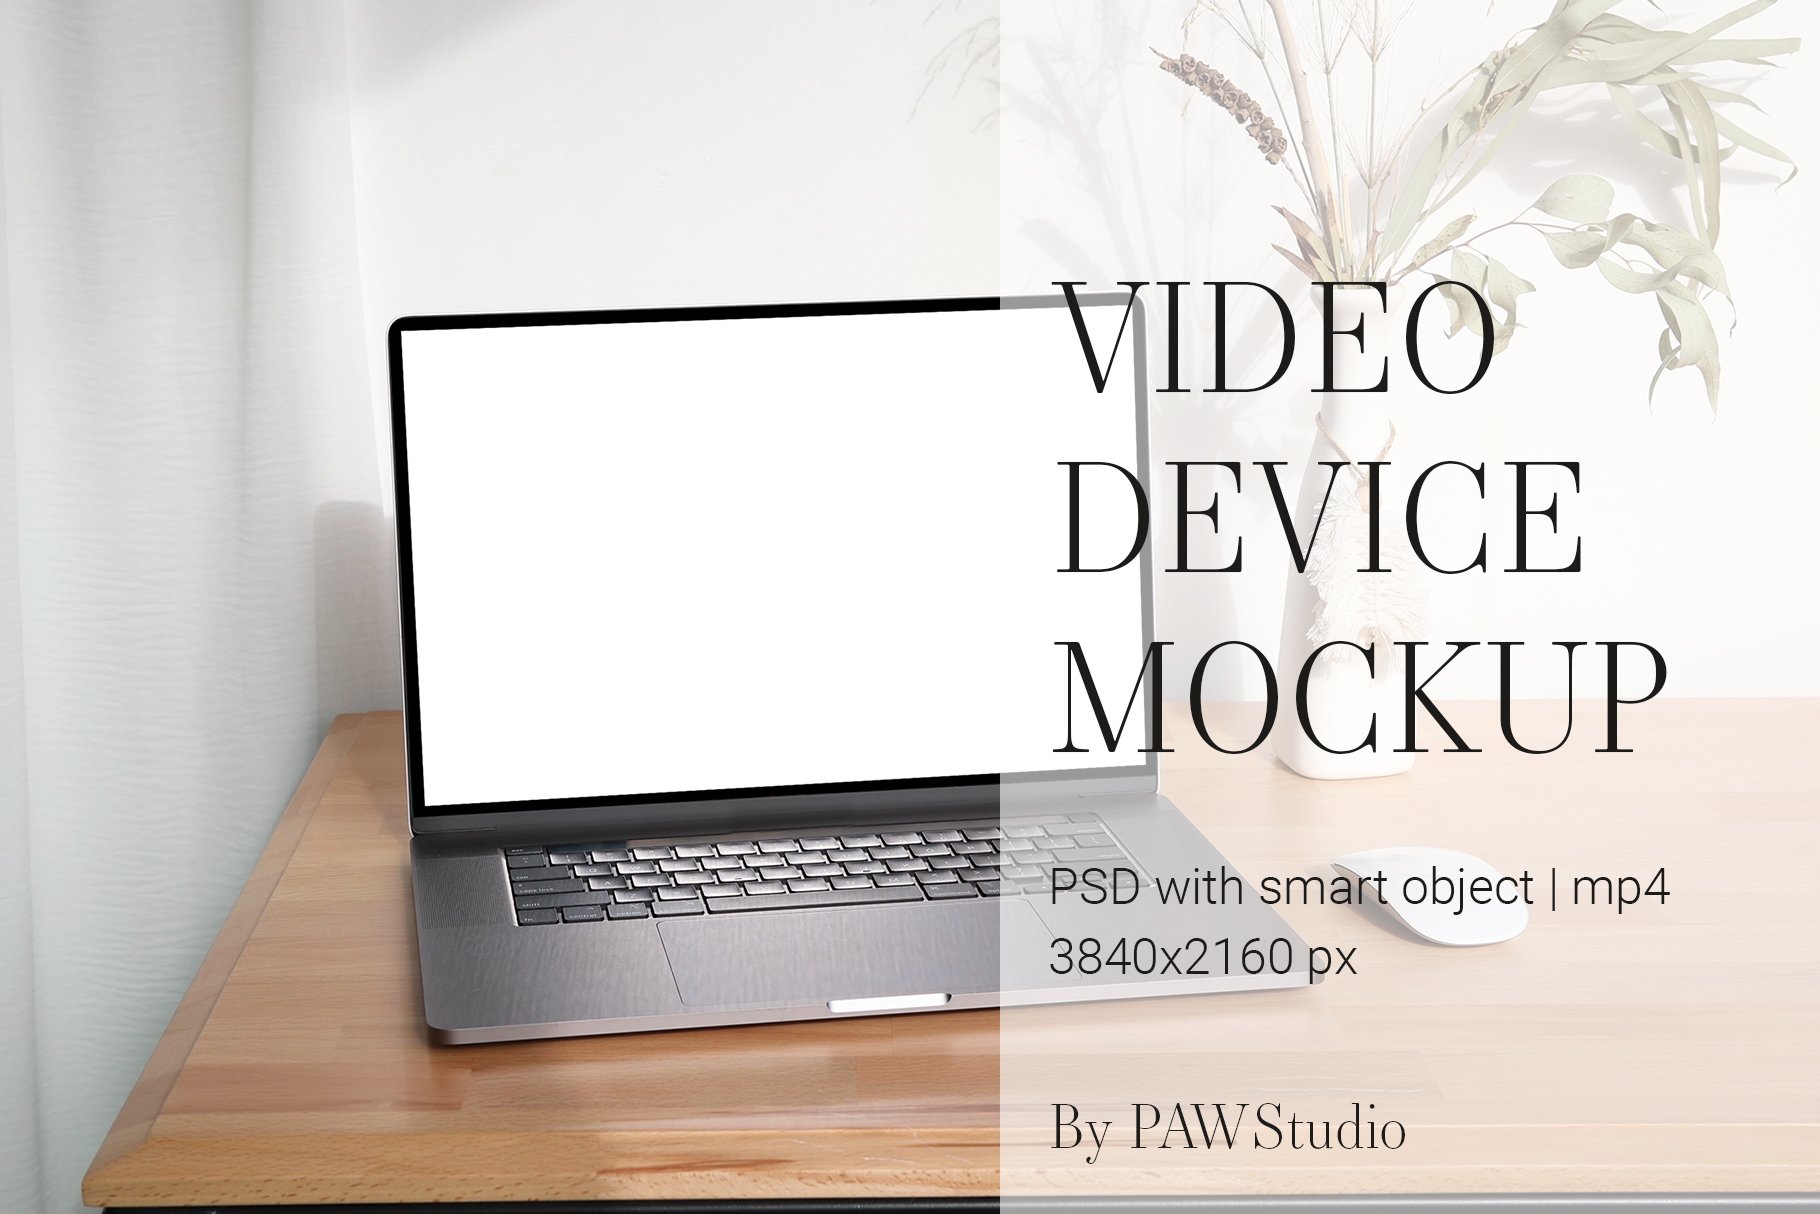 MacBook Video Mockup, Device Mockup cover image.